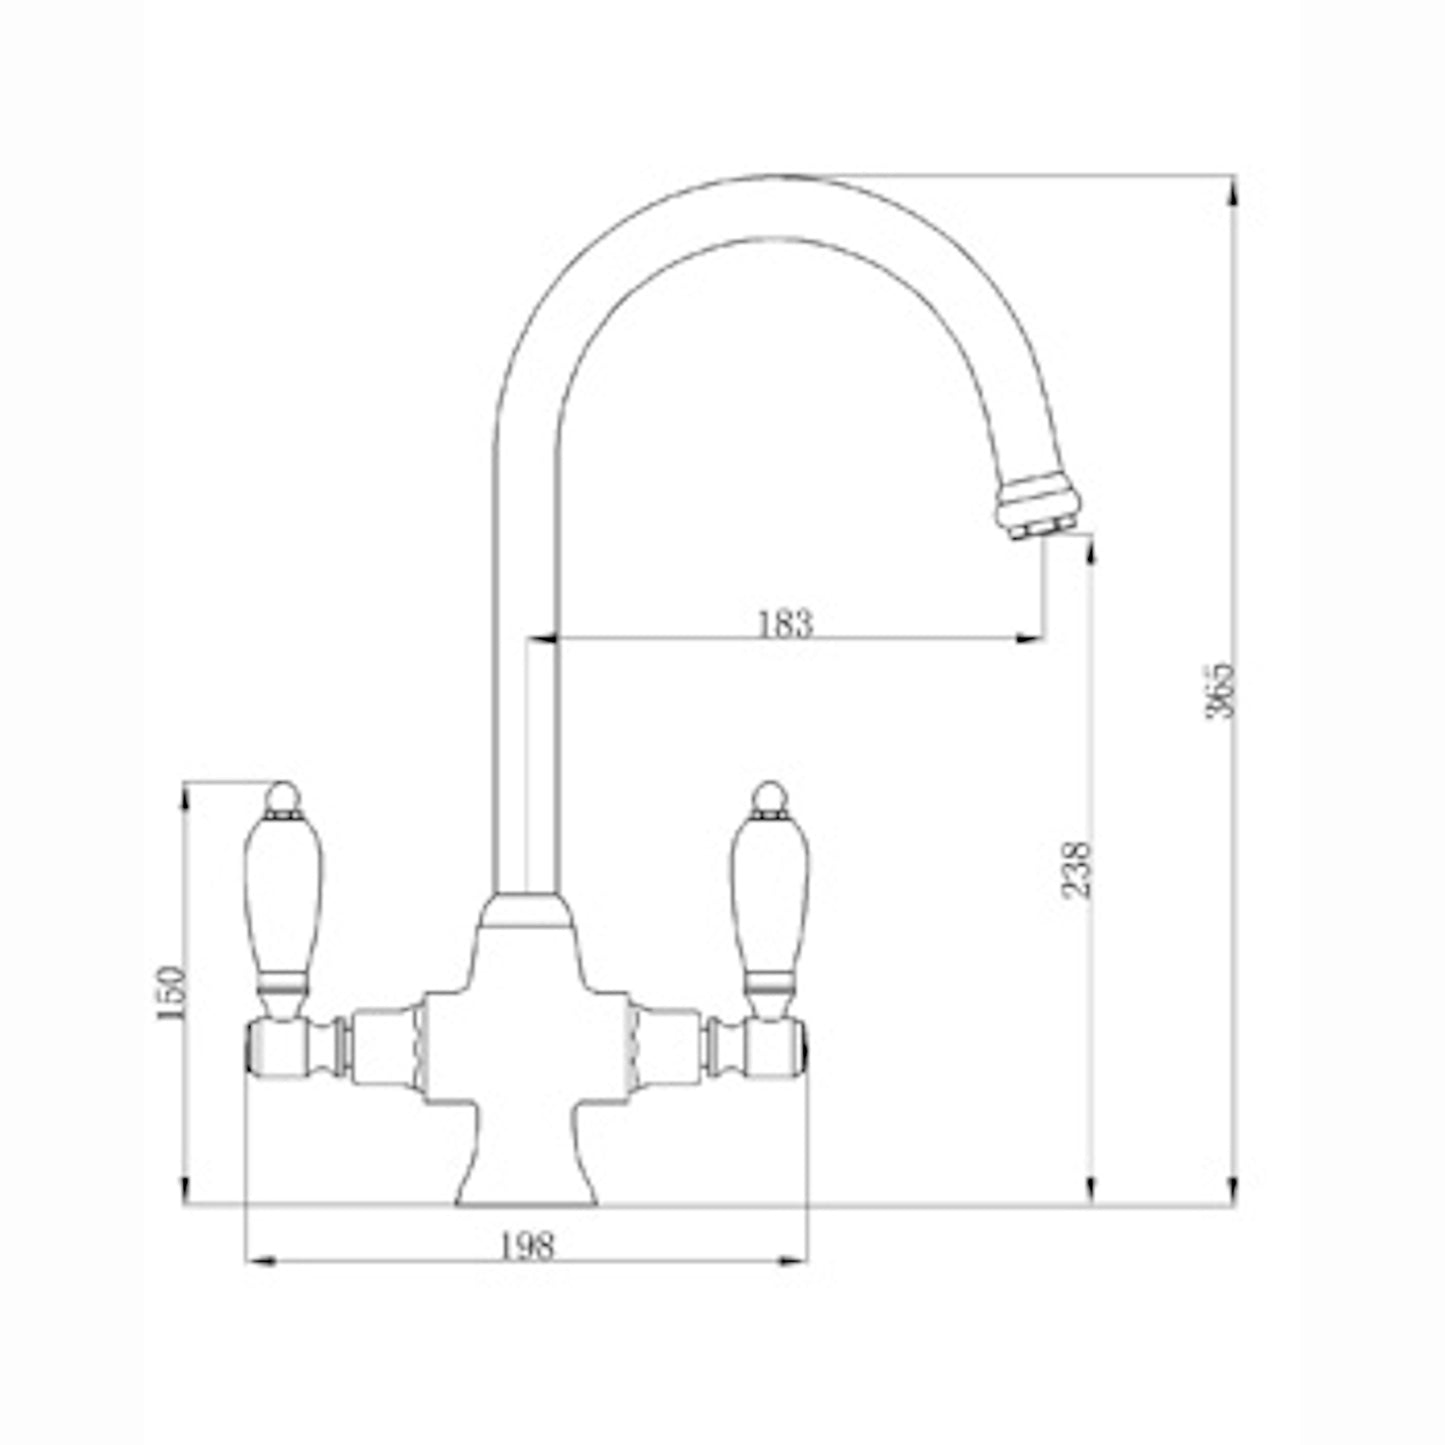 Dorchester Georgian dual flow kitchen sink tap with twin white levers - antique bronze